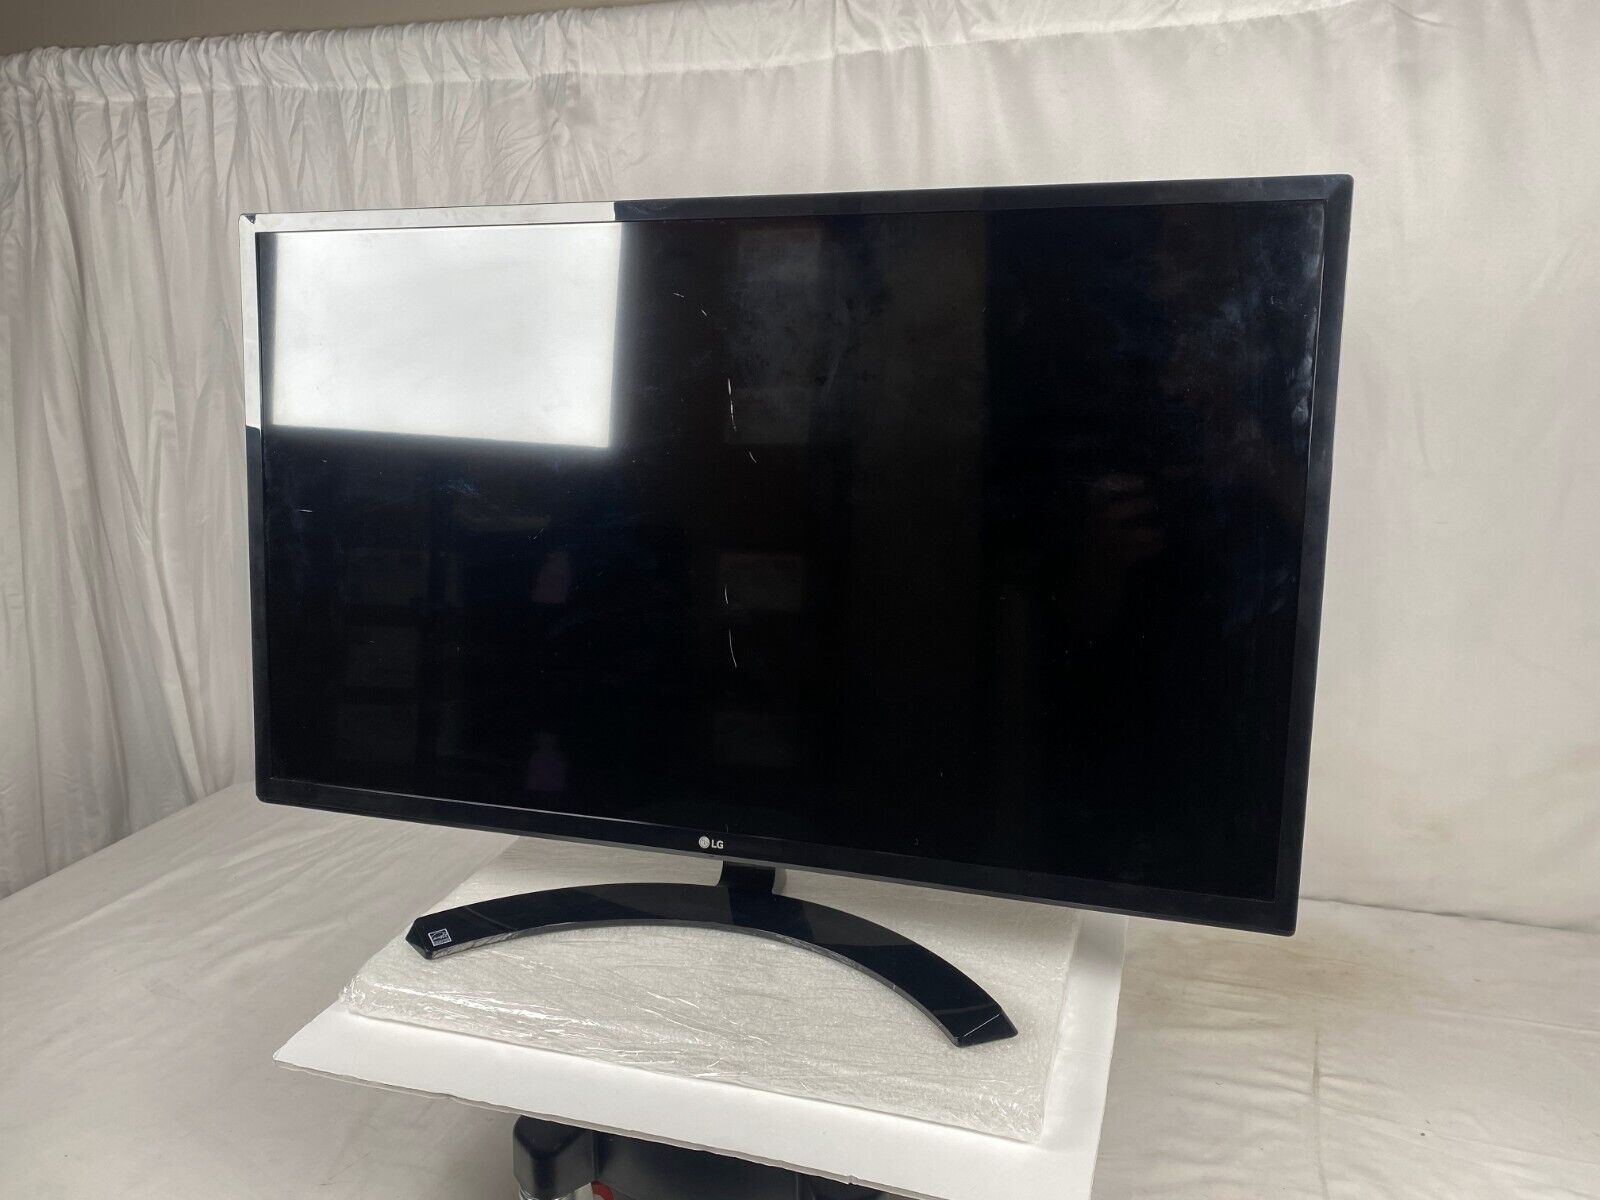 LG 32MA68HY-P 32 inch Full HD IPS LCD 1920x1080 Monitor - Black